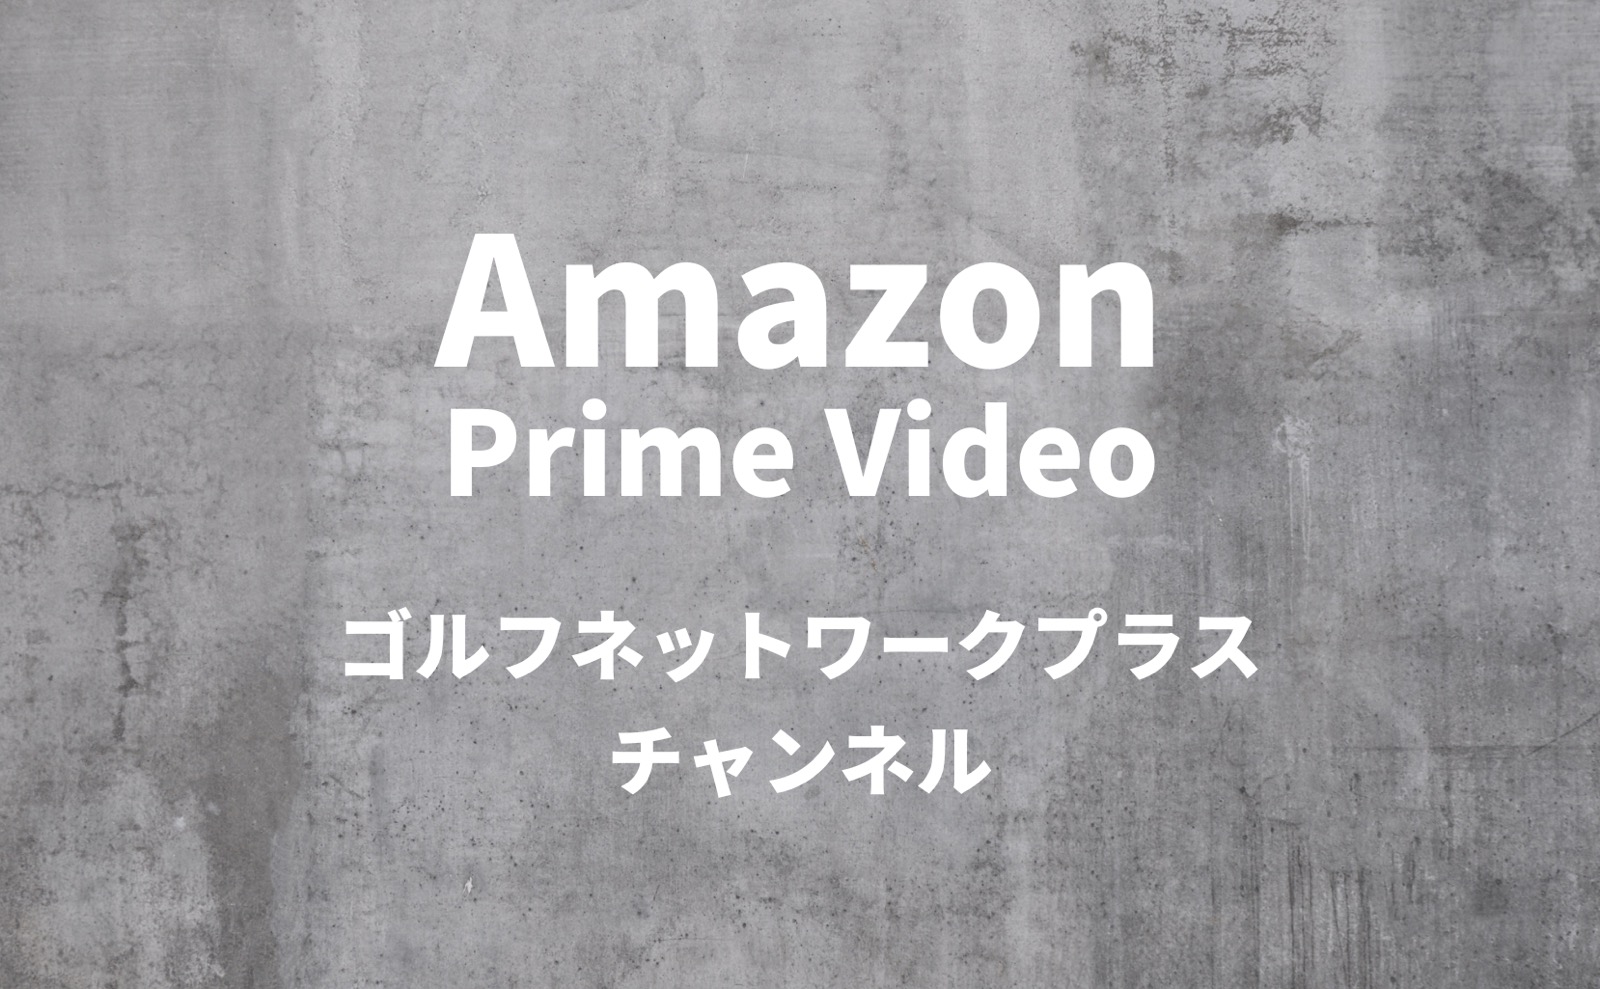 Amazon Prime Video ゴルフネットワークプラスチャンネル